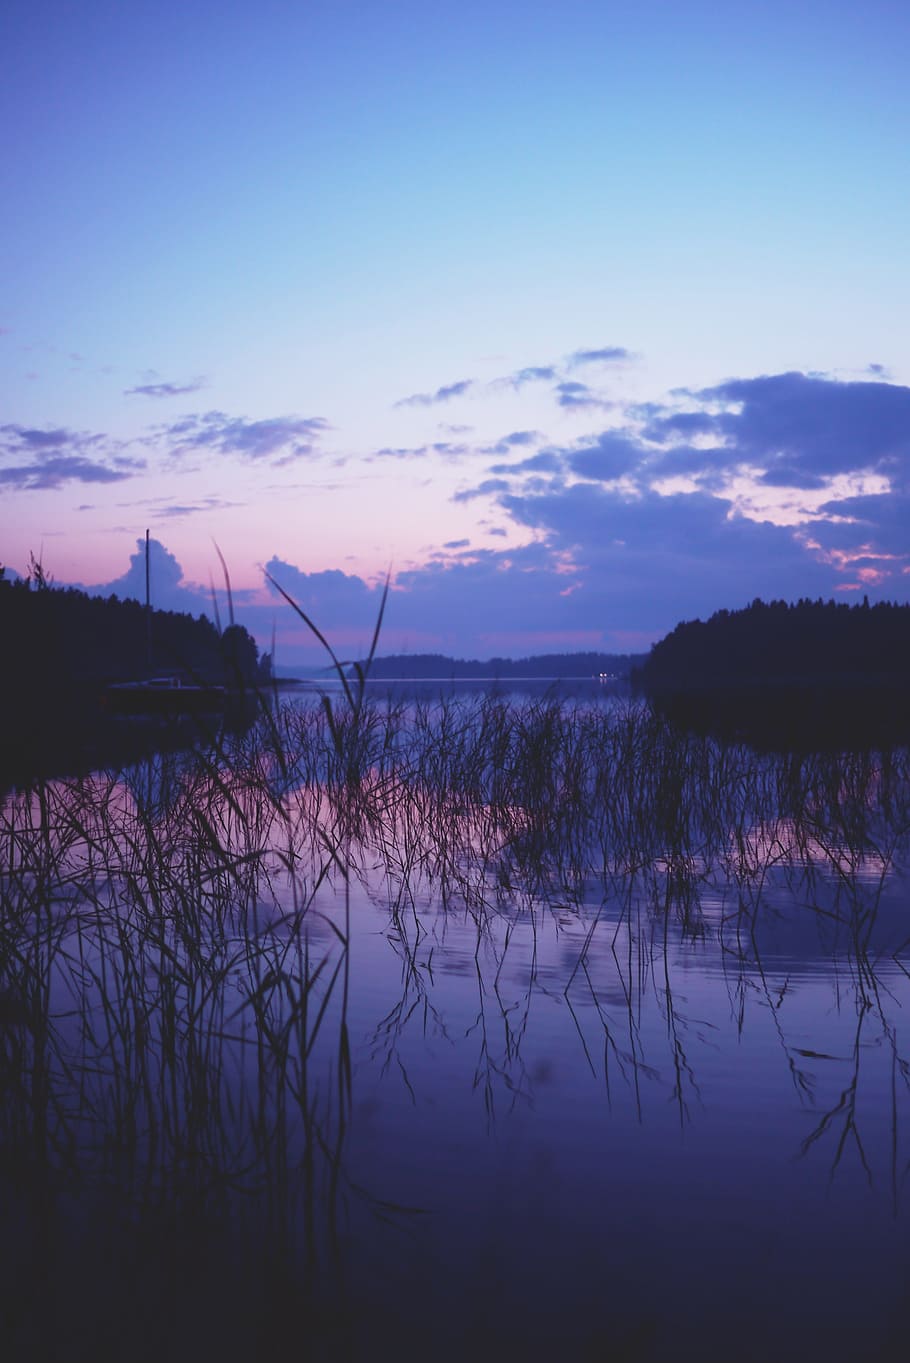 Lake, Landscape, Water, Nature, abendstimmung, sunset, bank, evening, afterglow, romantic